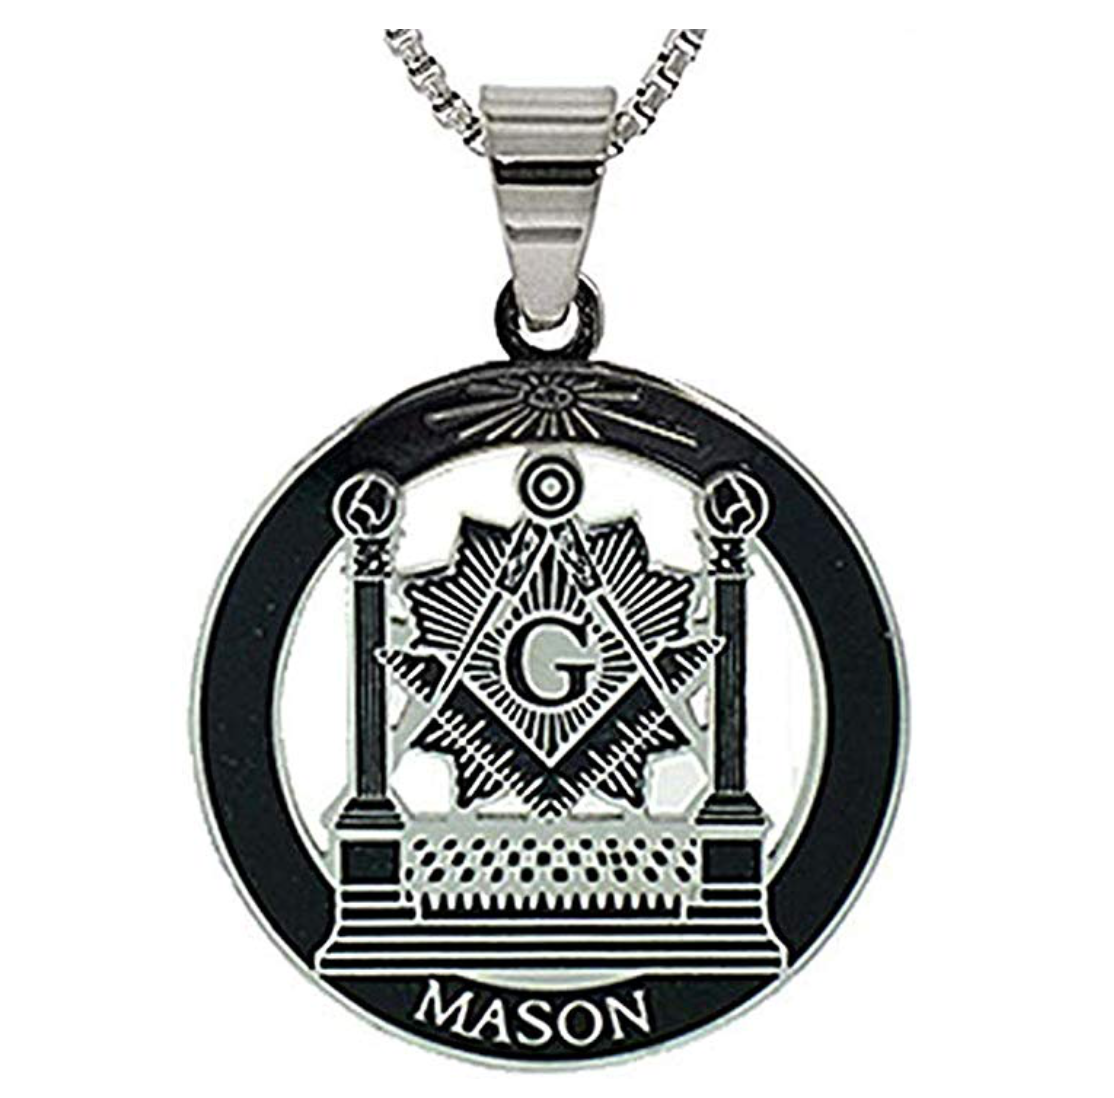 Silver Gold Color Masonic Necklace Pillars Freemason Chain Pendant Circle Mason Necklace Jewelry 24in.